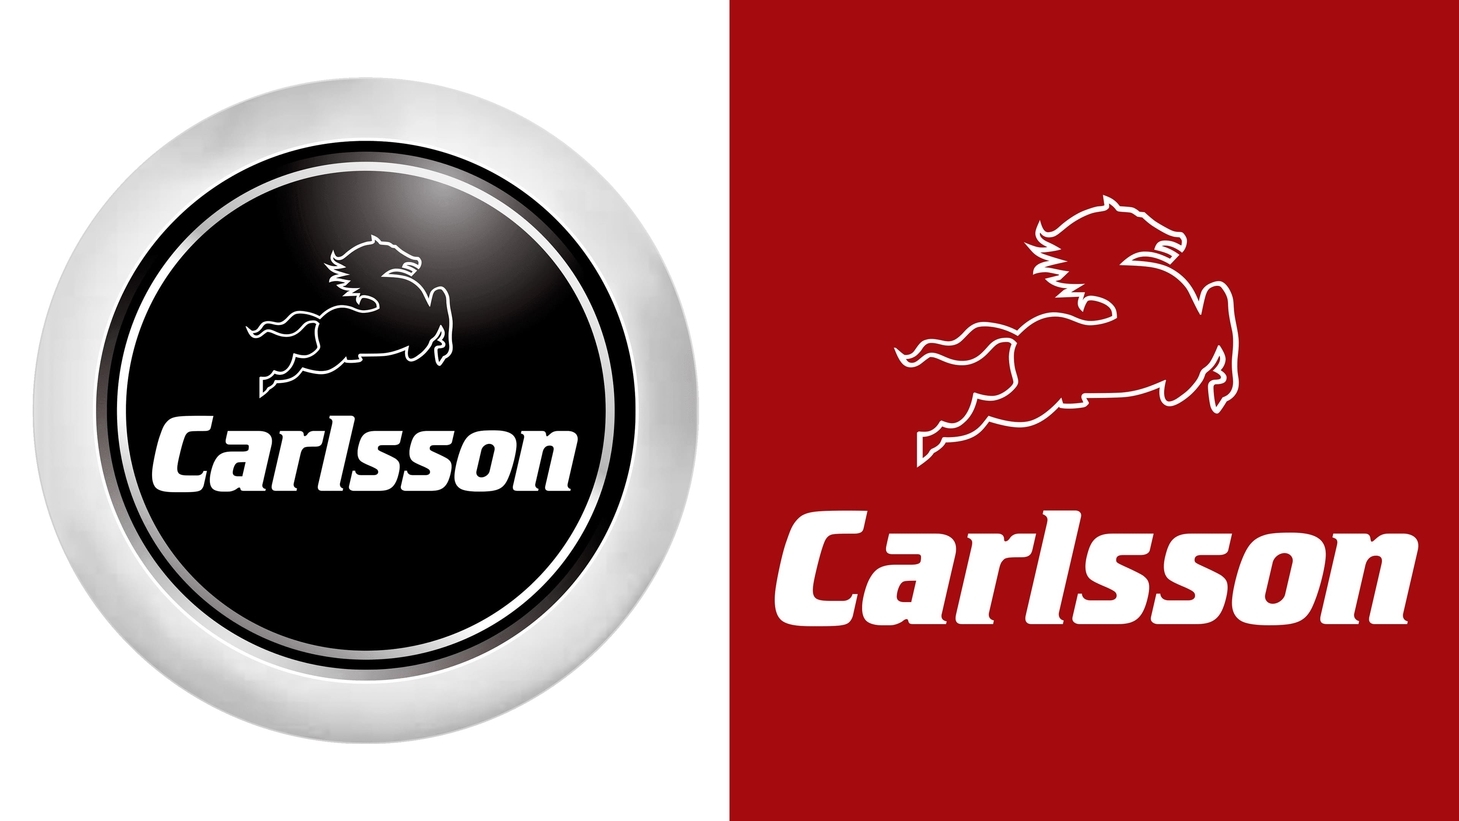 Carlsson automobile horse sign